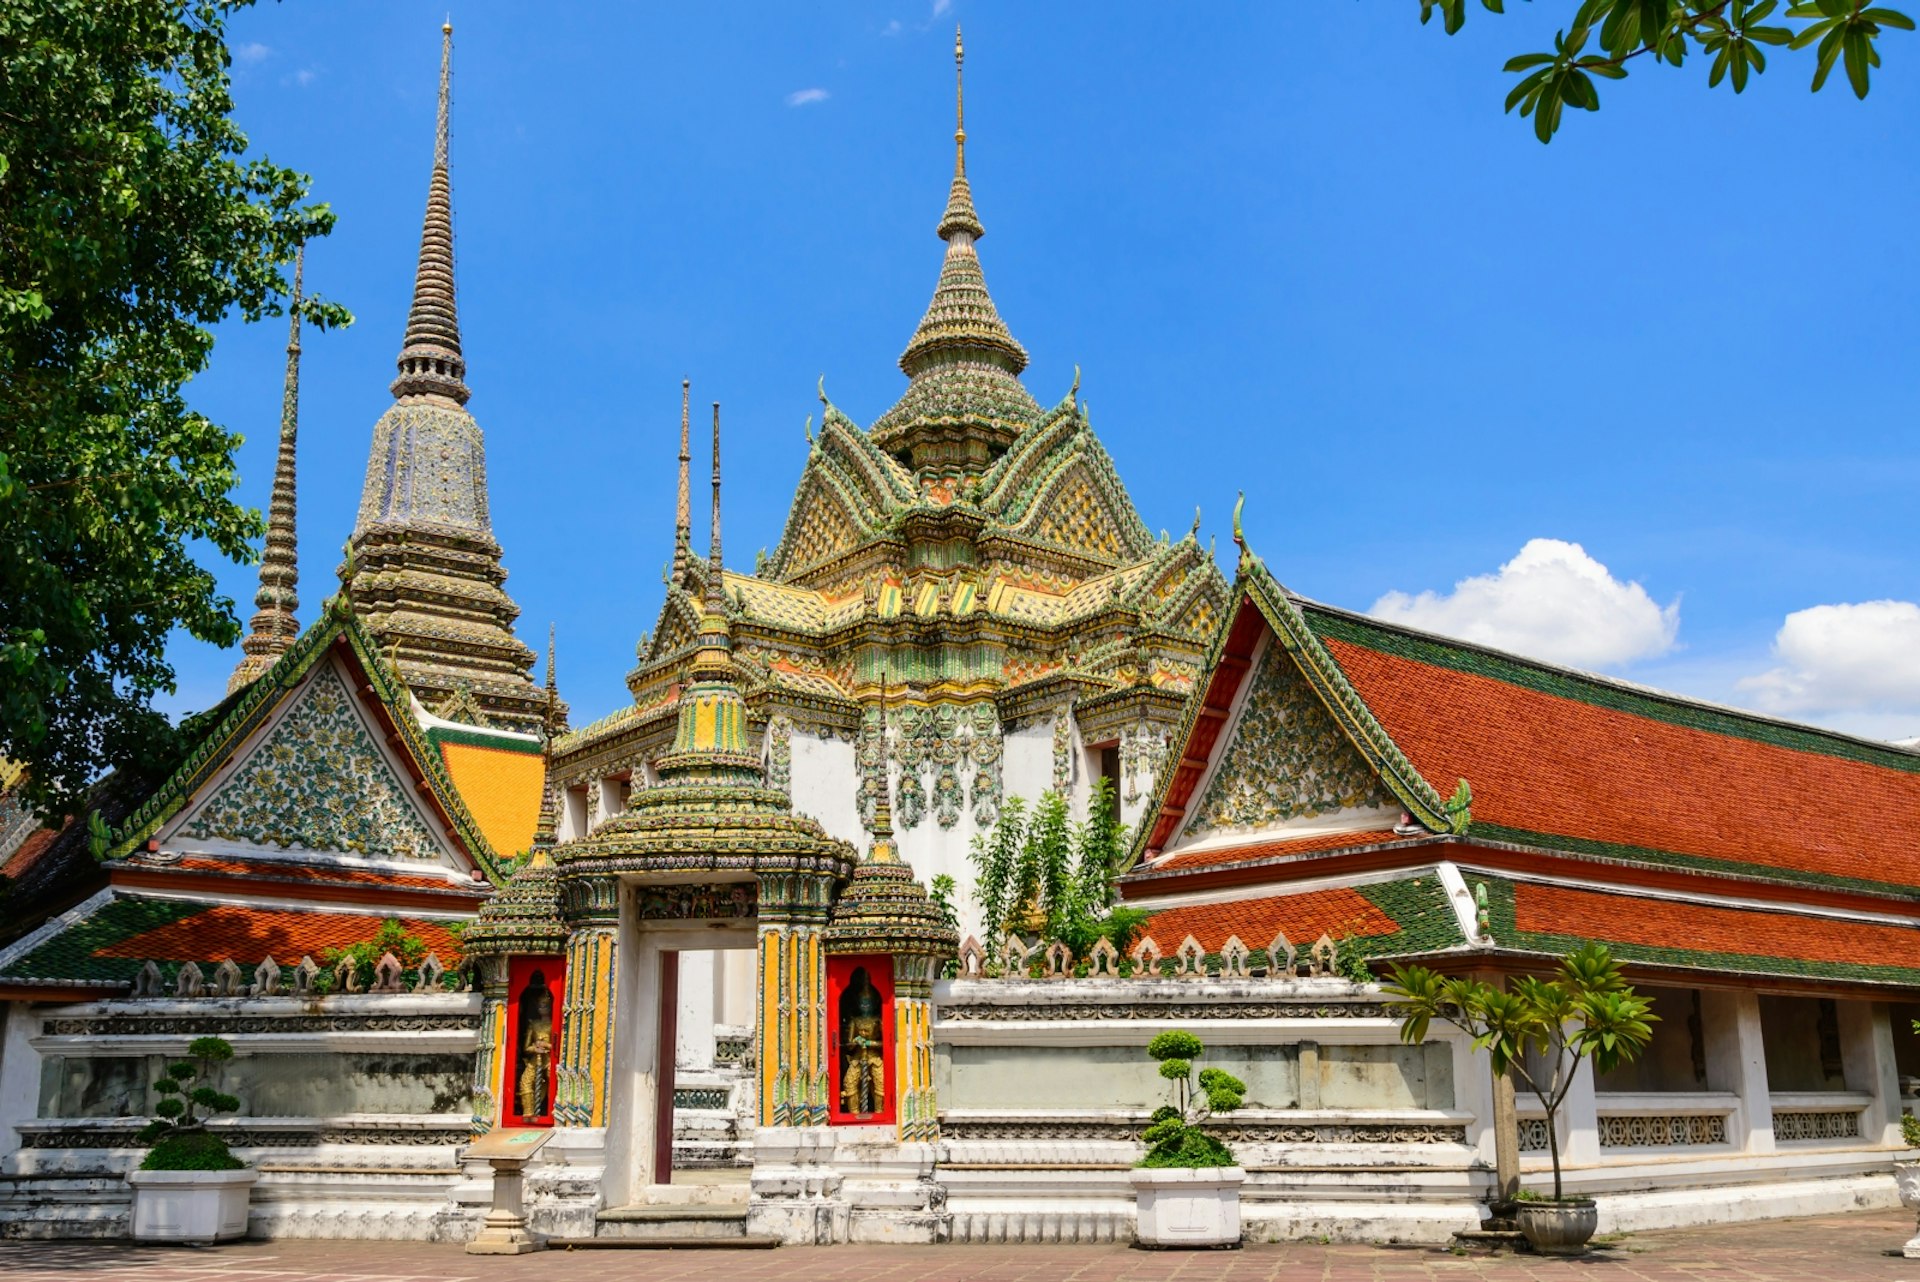 Wat Pho Temple houses the 'Reclining Buddha' in Bangkok, Thailand © itman__47 / Shutterstock